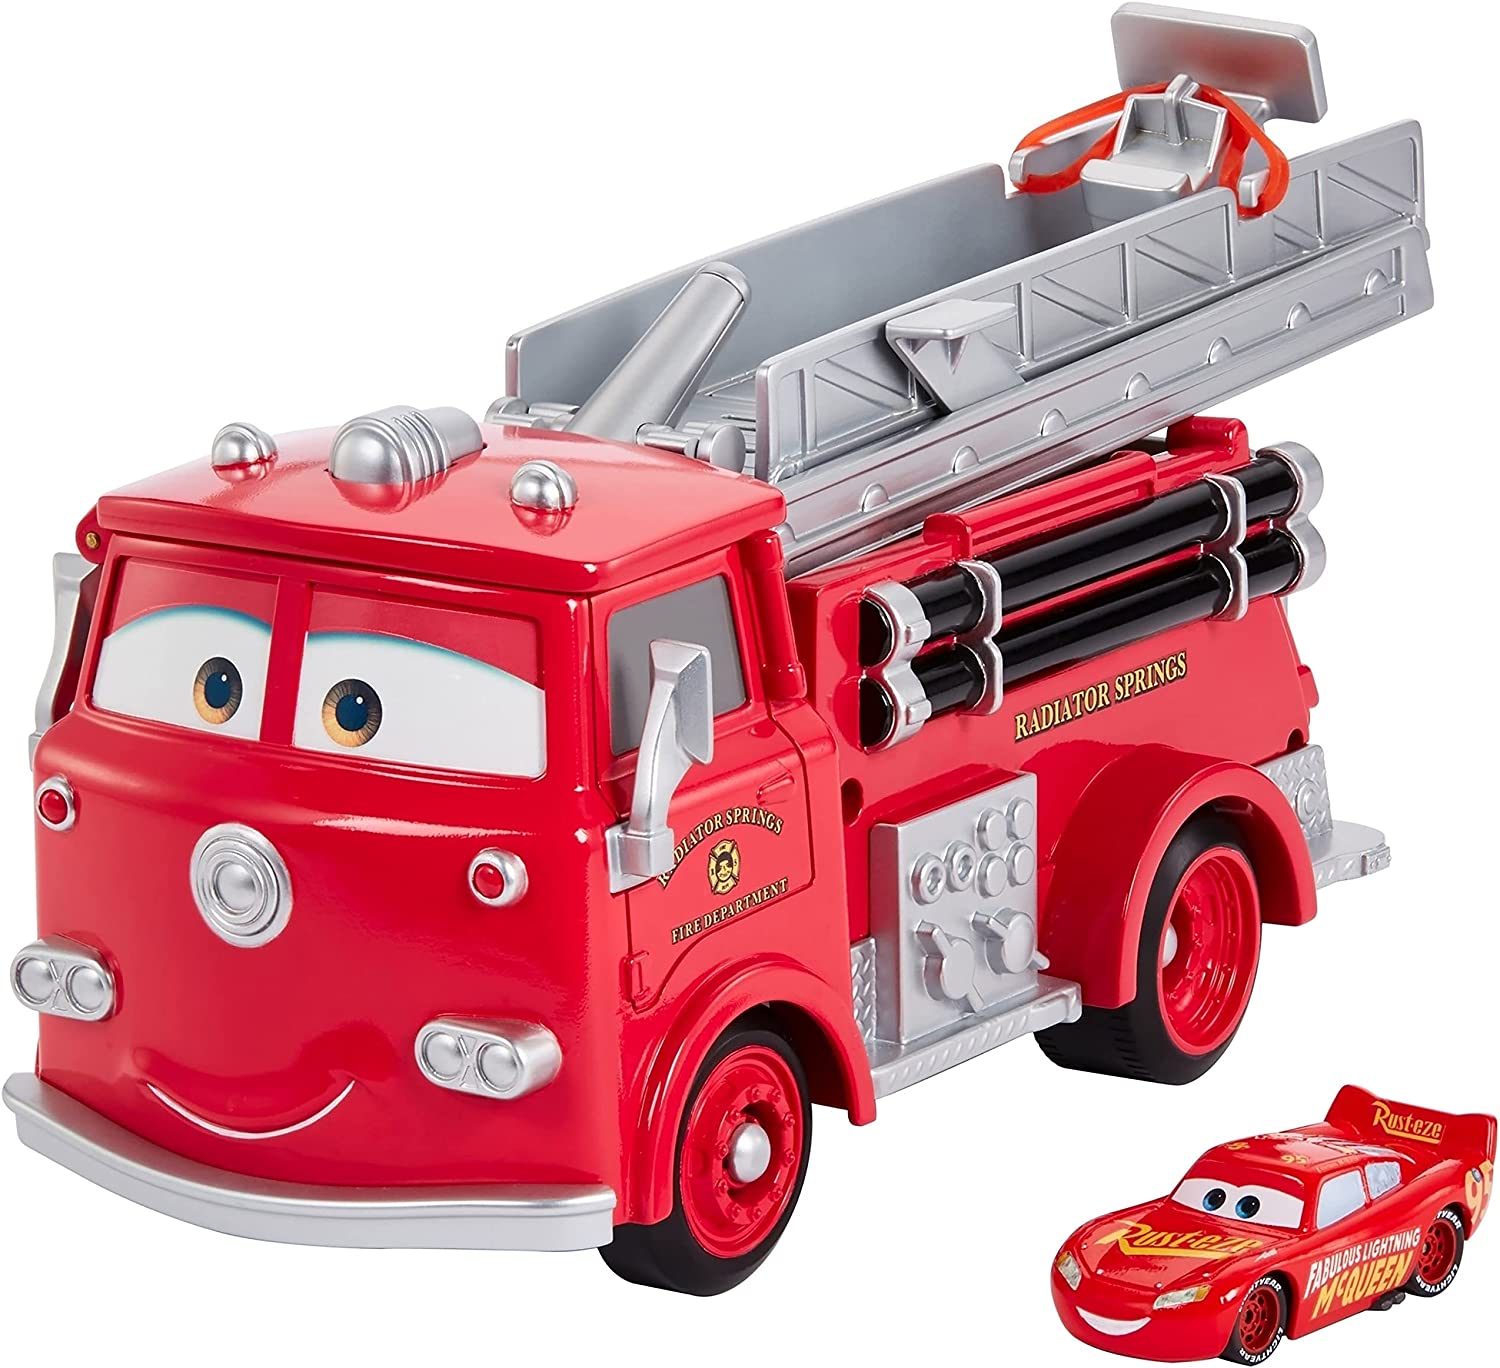 Disney Pixar Cars Stunt & Splash Red Playset w/ Color Changing Lightning McQueen Vehicle $15 + FS w/ Prime or on $25+